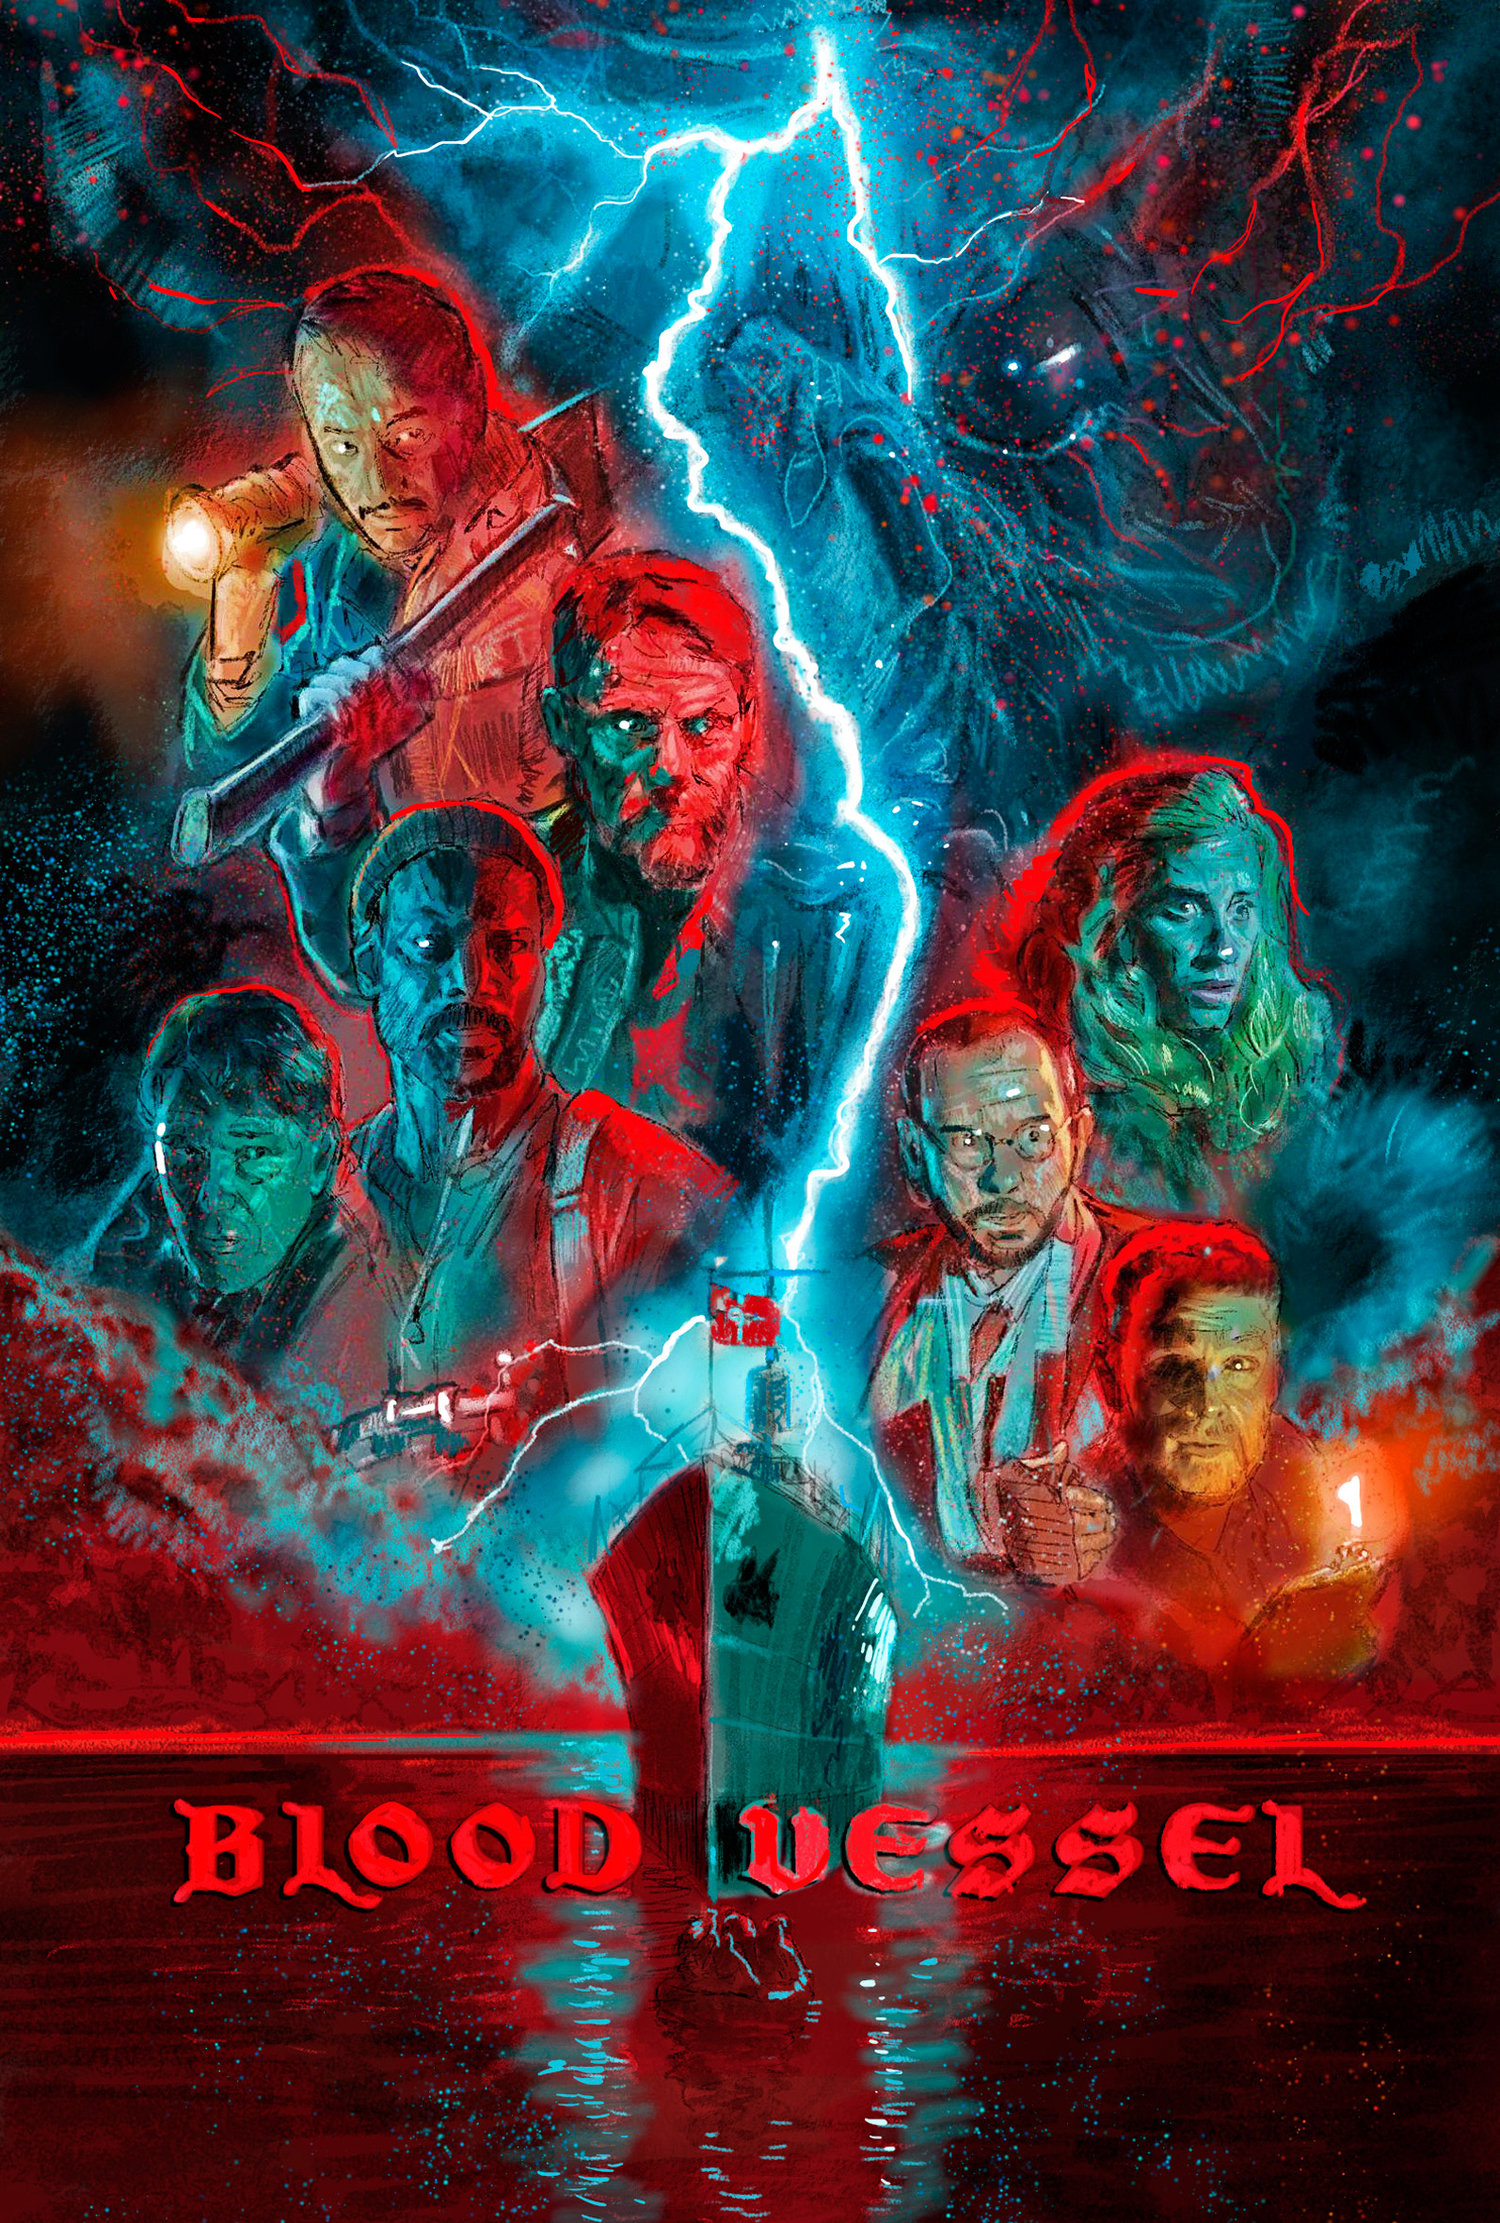 Blood Vessel 2020 English 296MB HDRip ESub Download